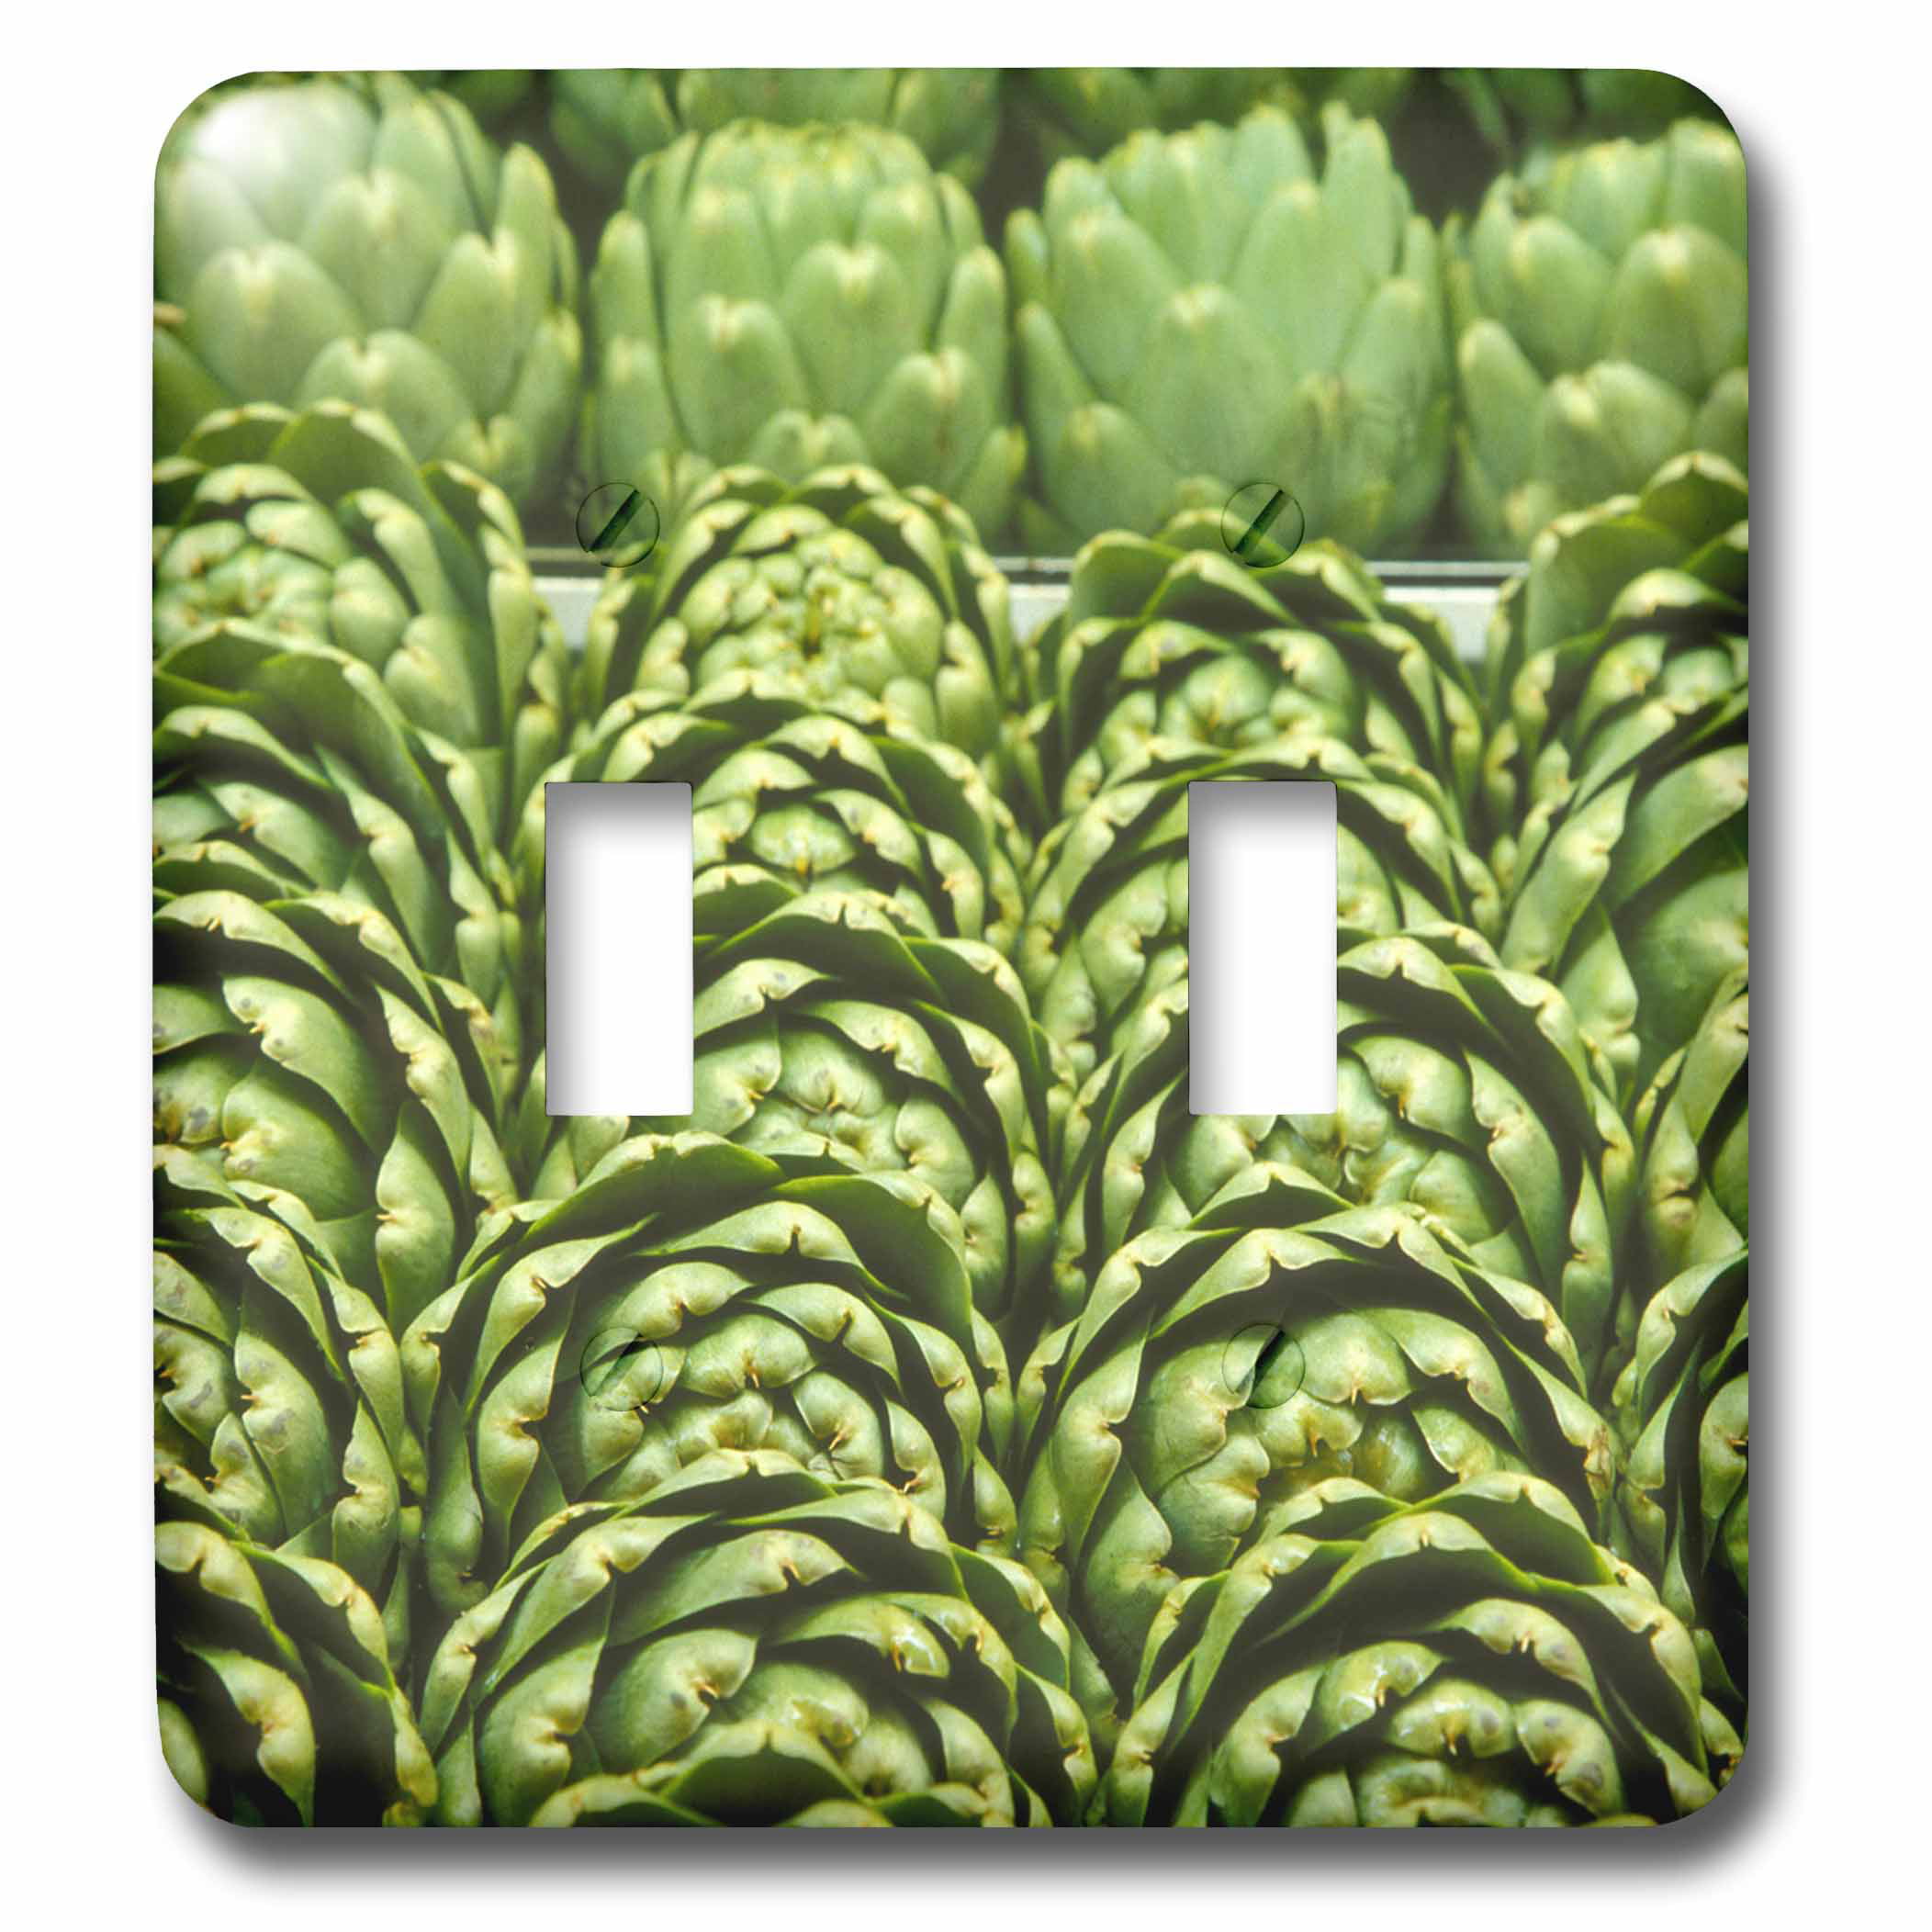 set of 6 3dRose Rows of green artichokes LI11 JMI0001 6 x 6 inches gc_83265_1 Greeting Cards Janis Miglavs Vegetables